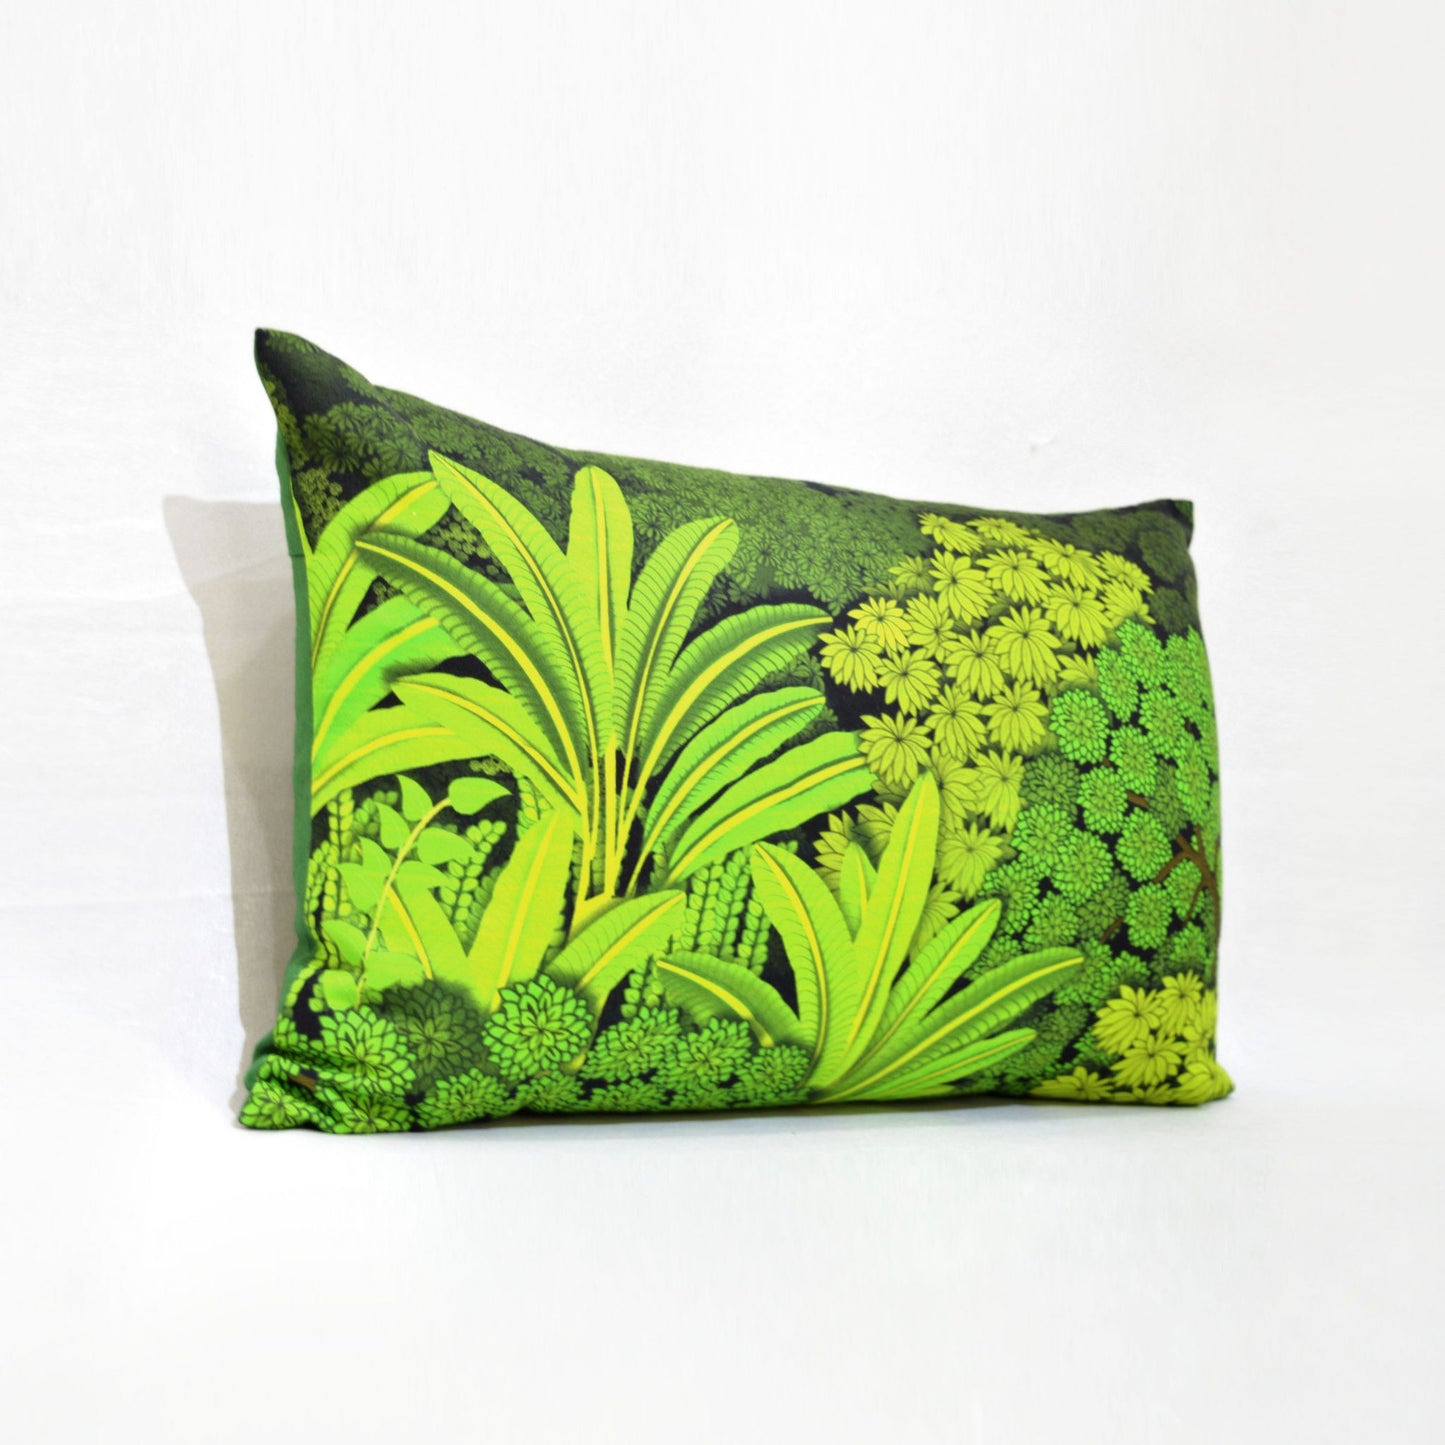 Pichwai - Tropical green printed rectanglular pillow cover